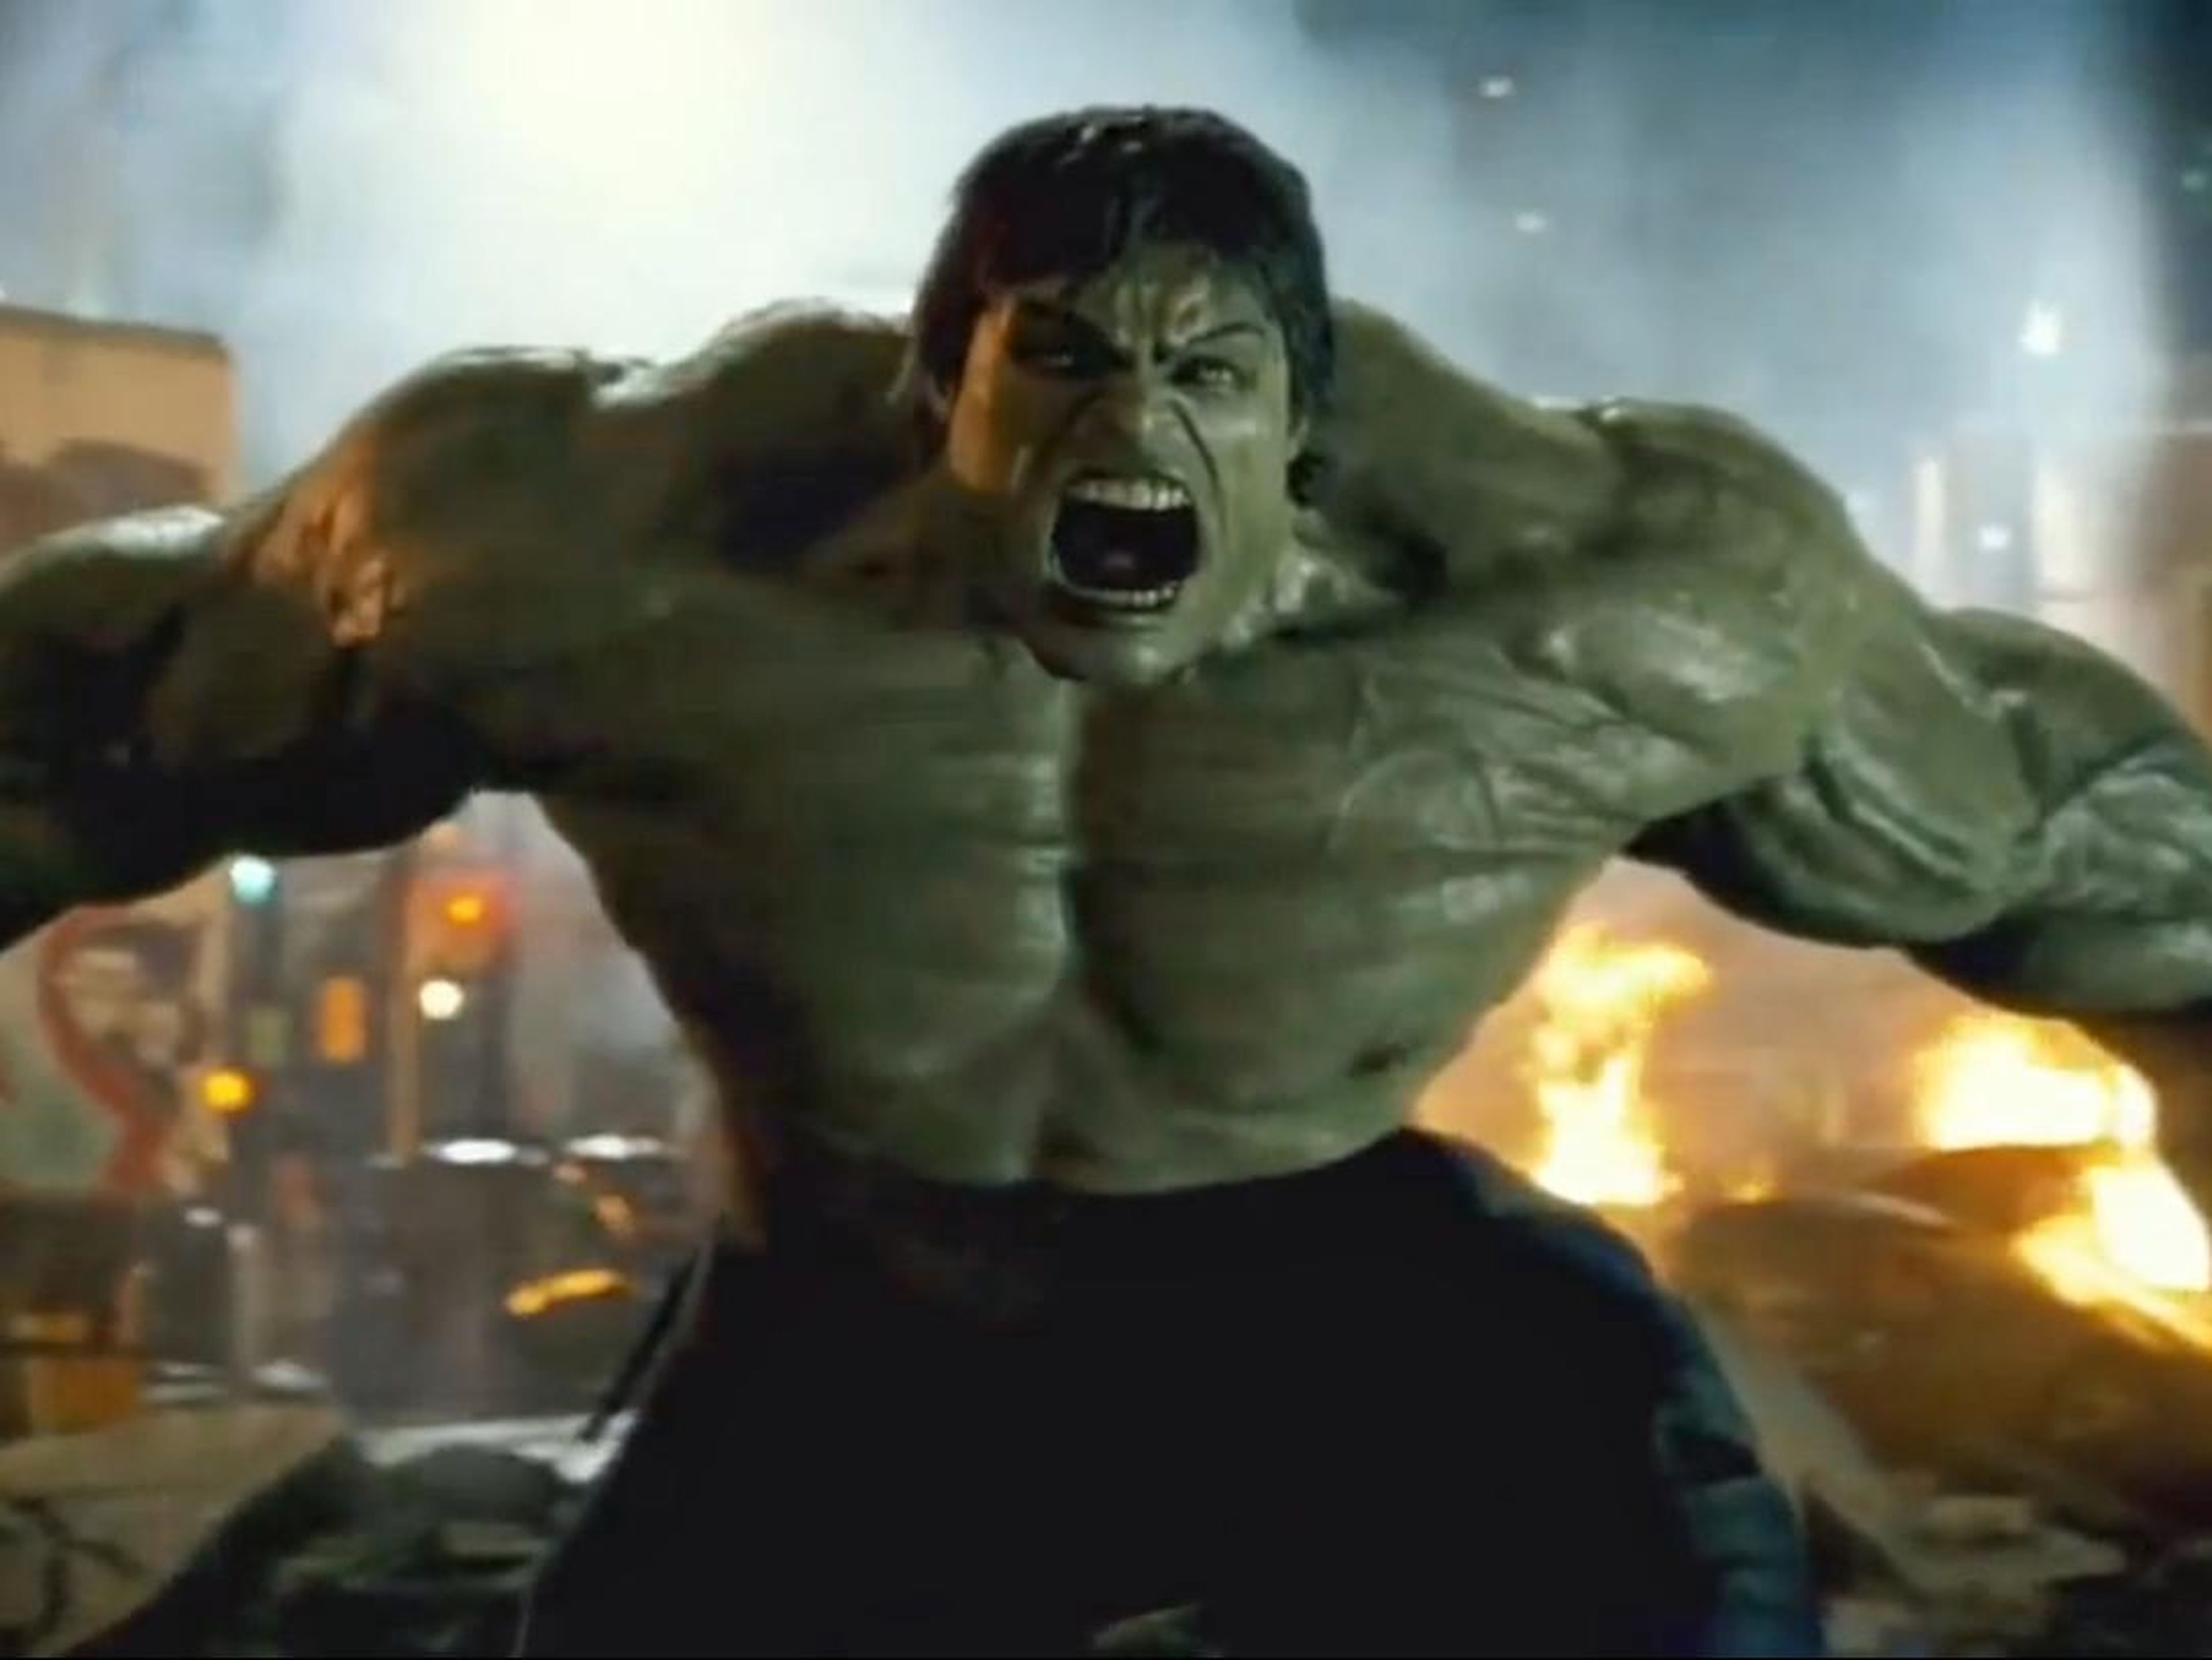 21. "The Incredible Hulk" (2008)